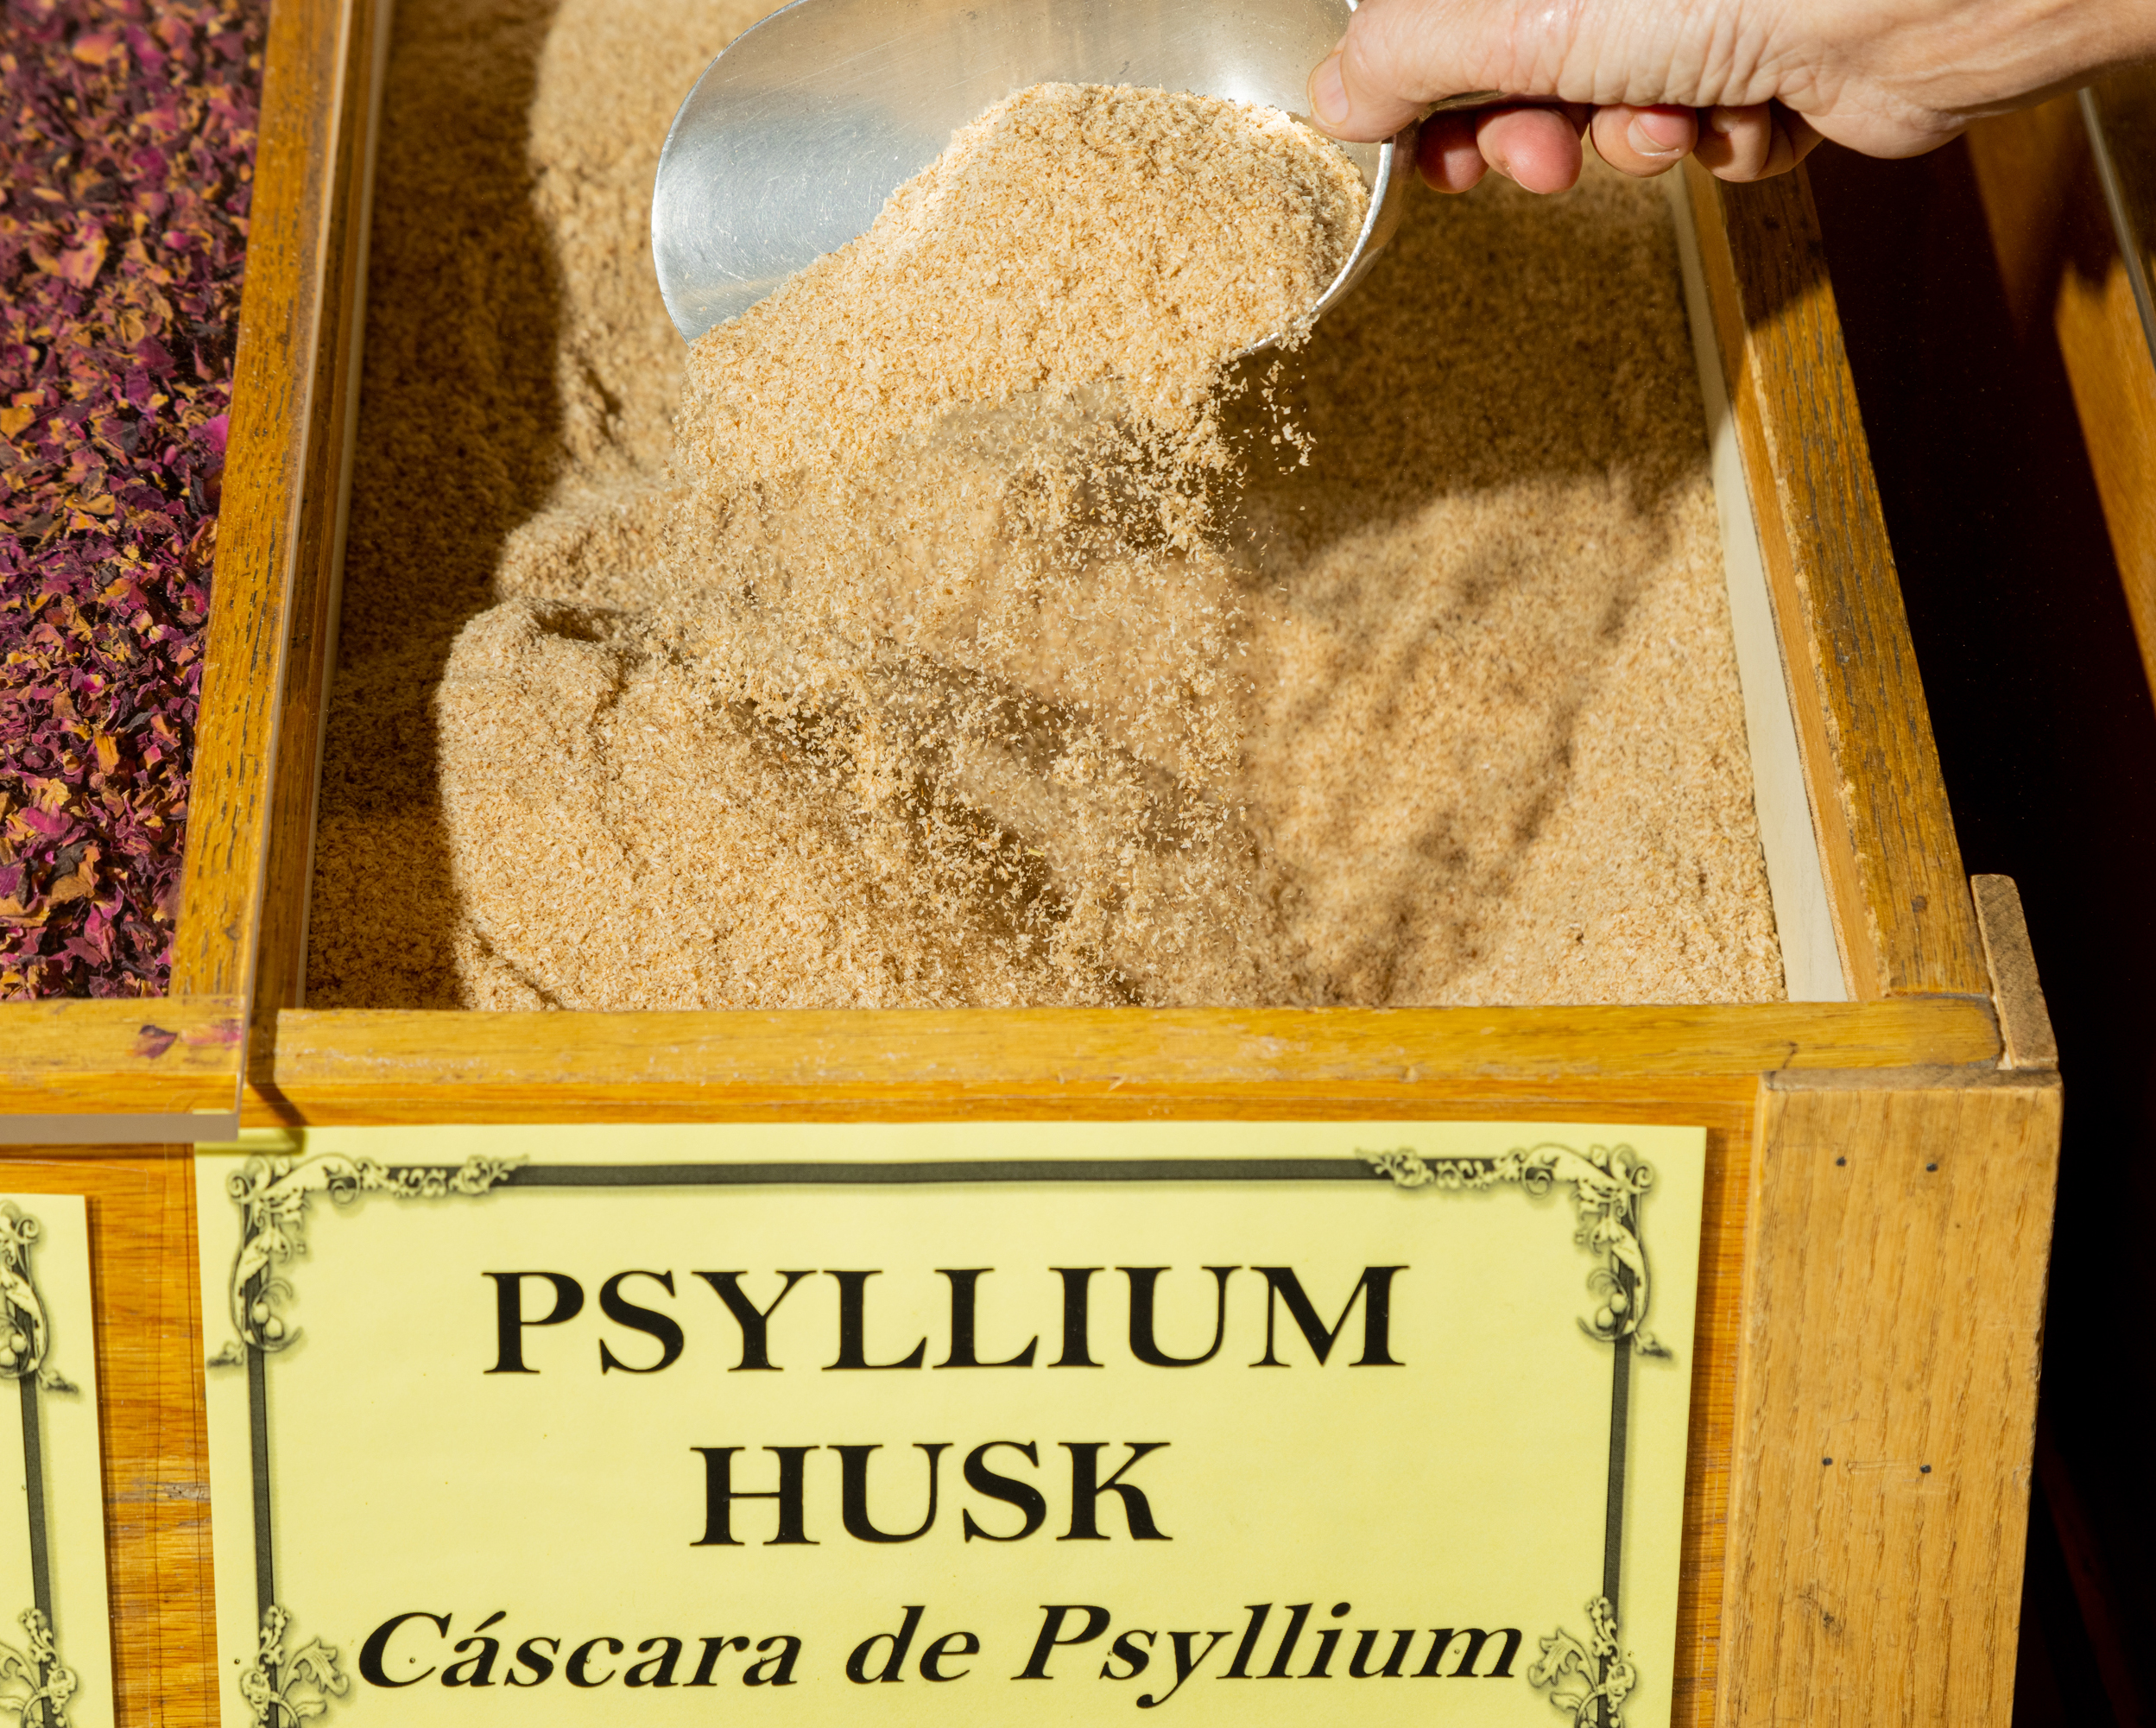 A hand is scooping psyllium husk from a wooden bin labeled &quot;PSYLLIUM HUSK Cáscara de Psyllium.&quot;